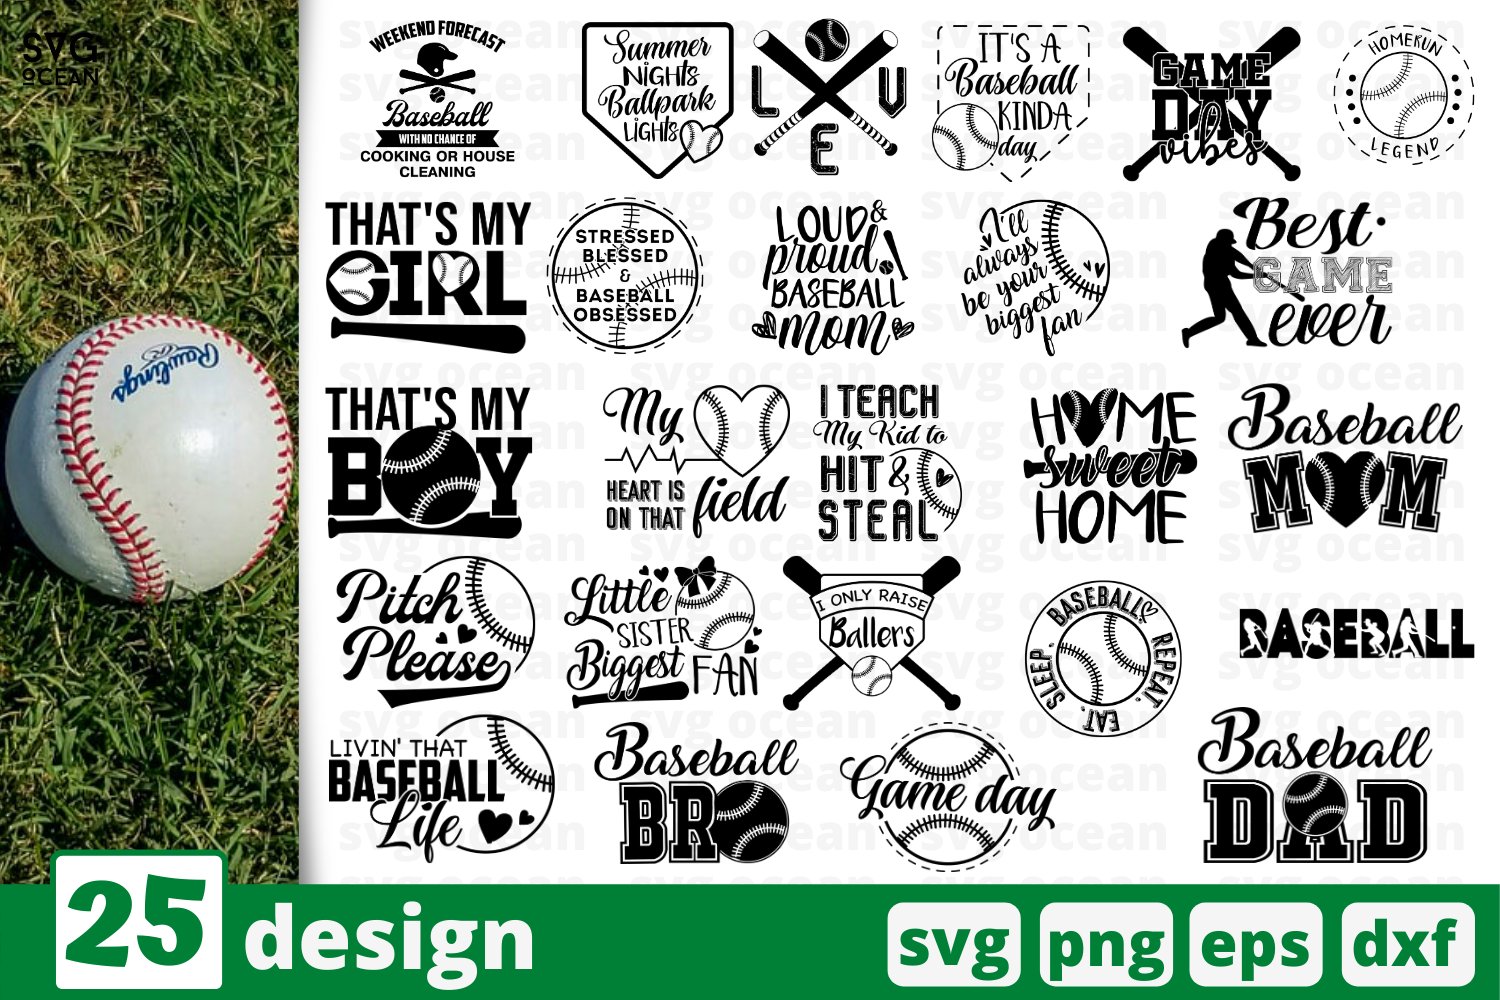 Baseball SVG Bundle cover image.